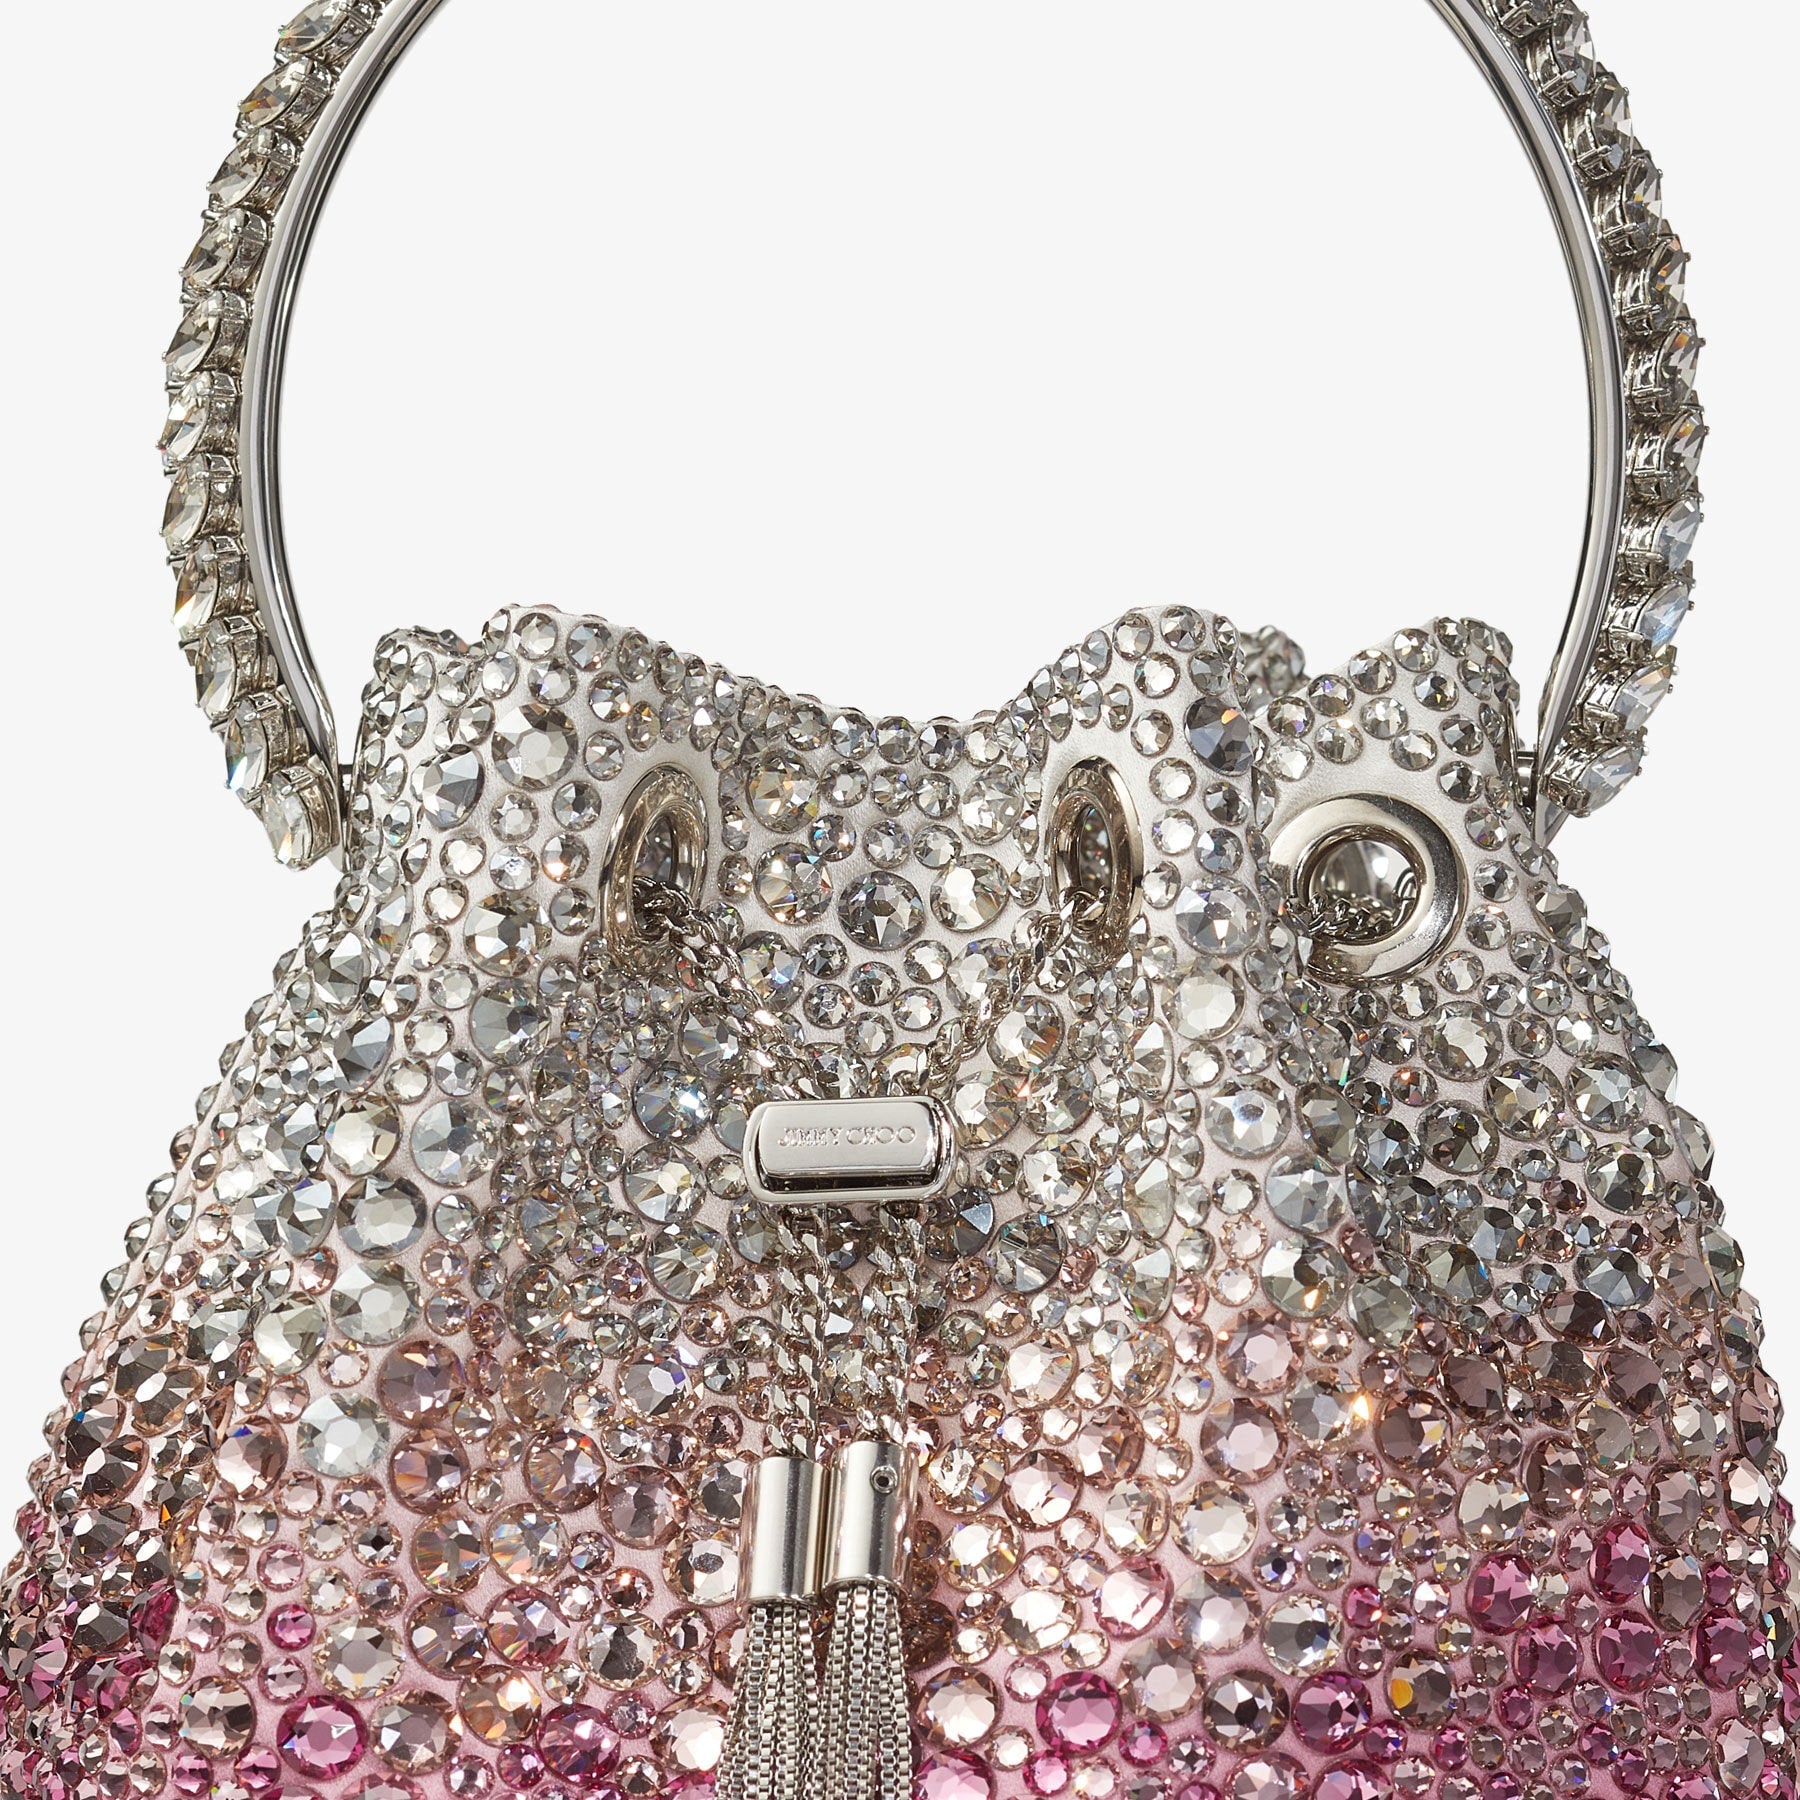 Bon Bon Crystal Bucket Bag in Candy Pink/Silver Handbags JIMMY CHOO - LOLAMIR